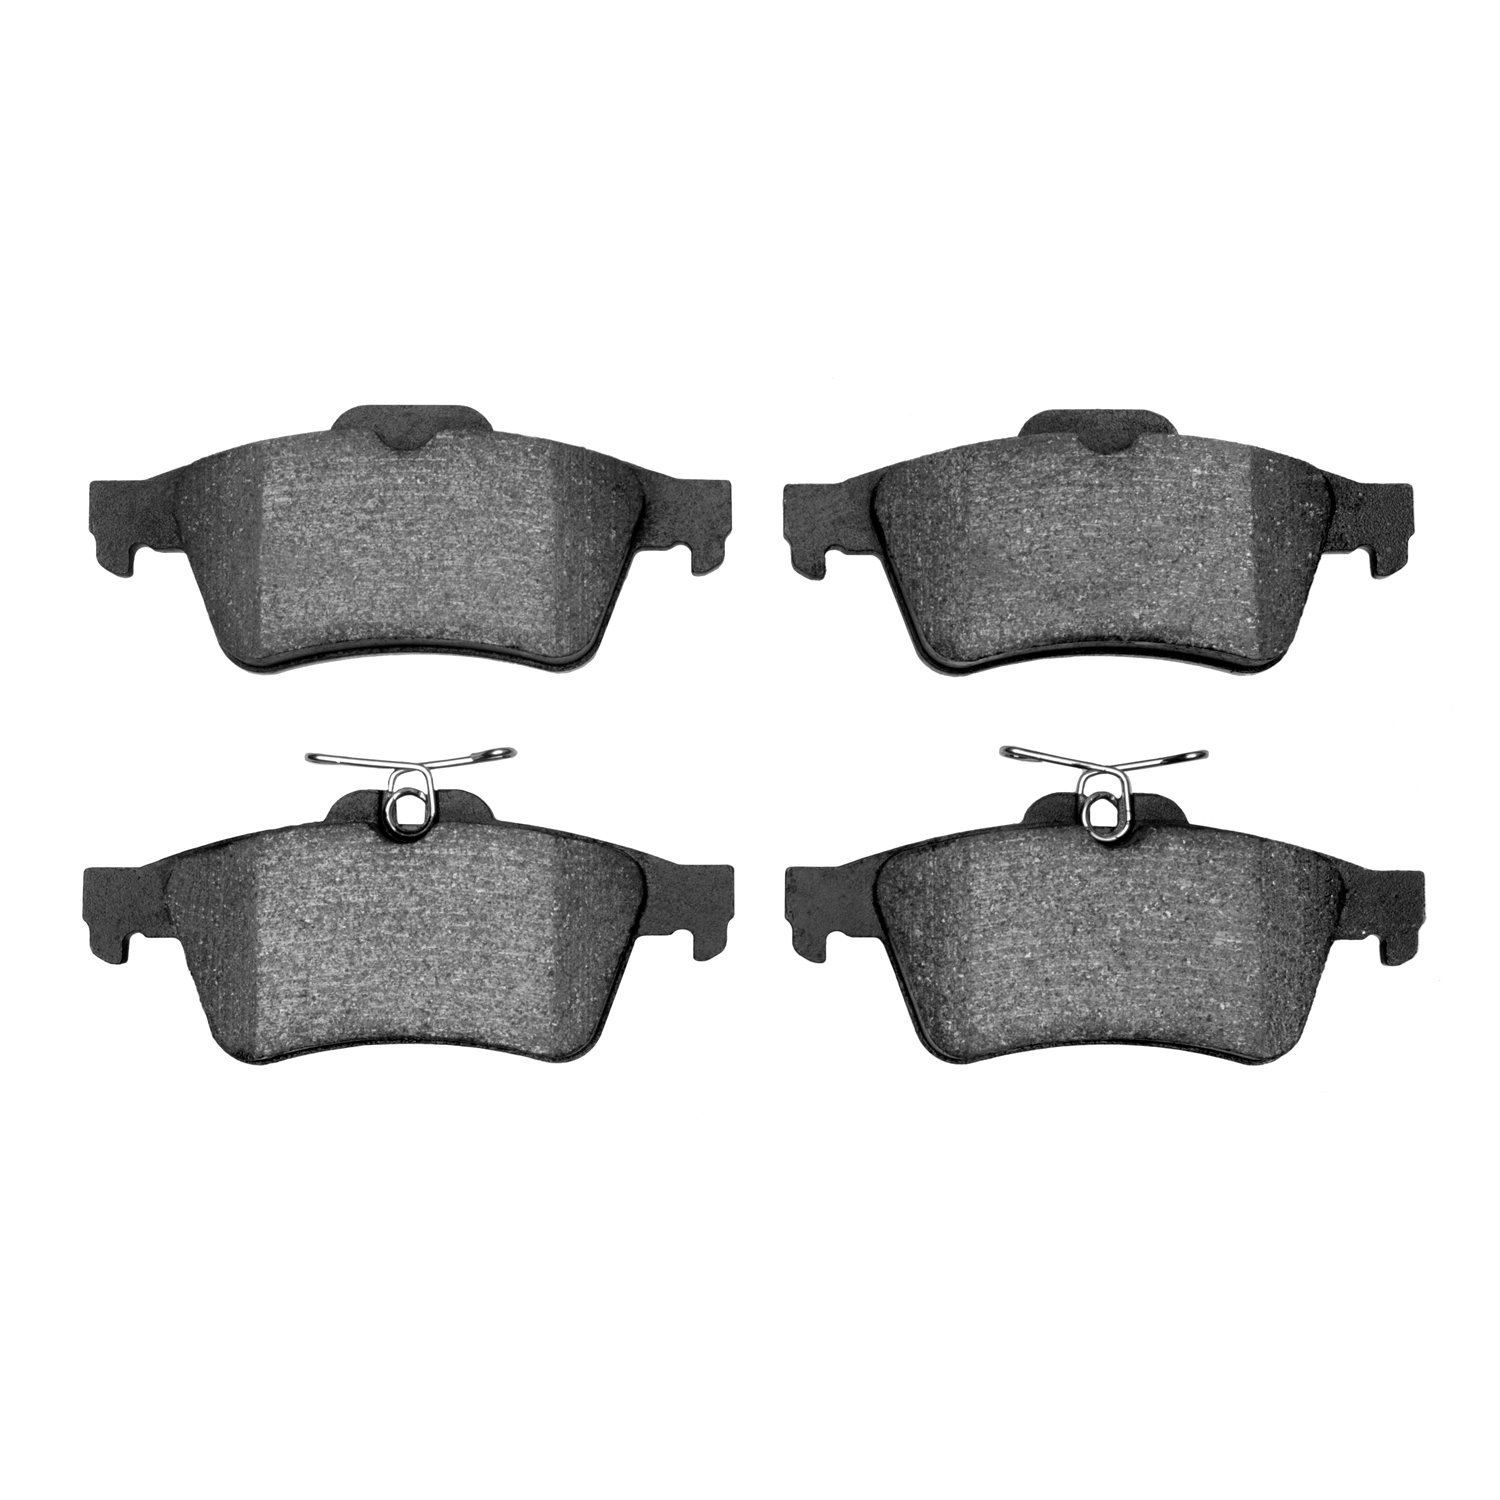 1600-1095-00 5000 Euro Ceramic Brake Pads, Fits Select Multiple Makes/Models, Position: Rear